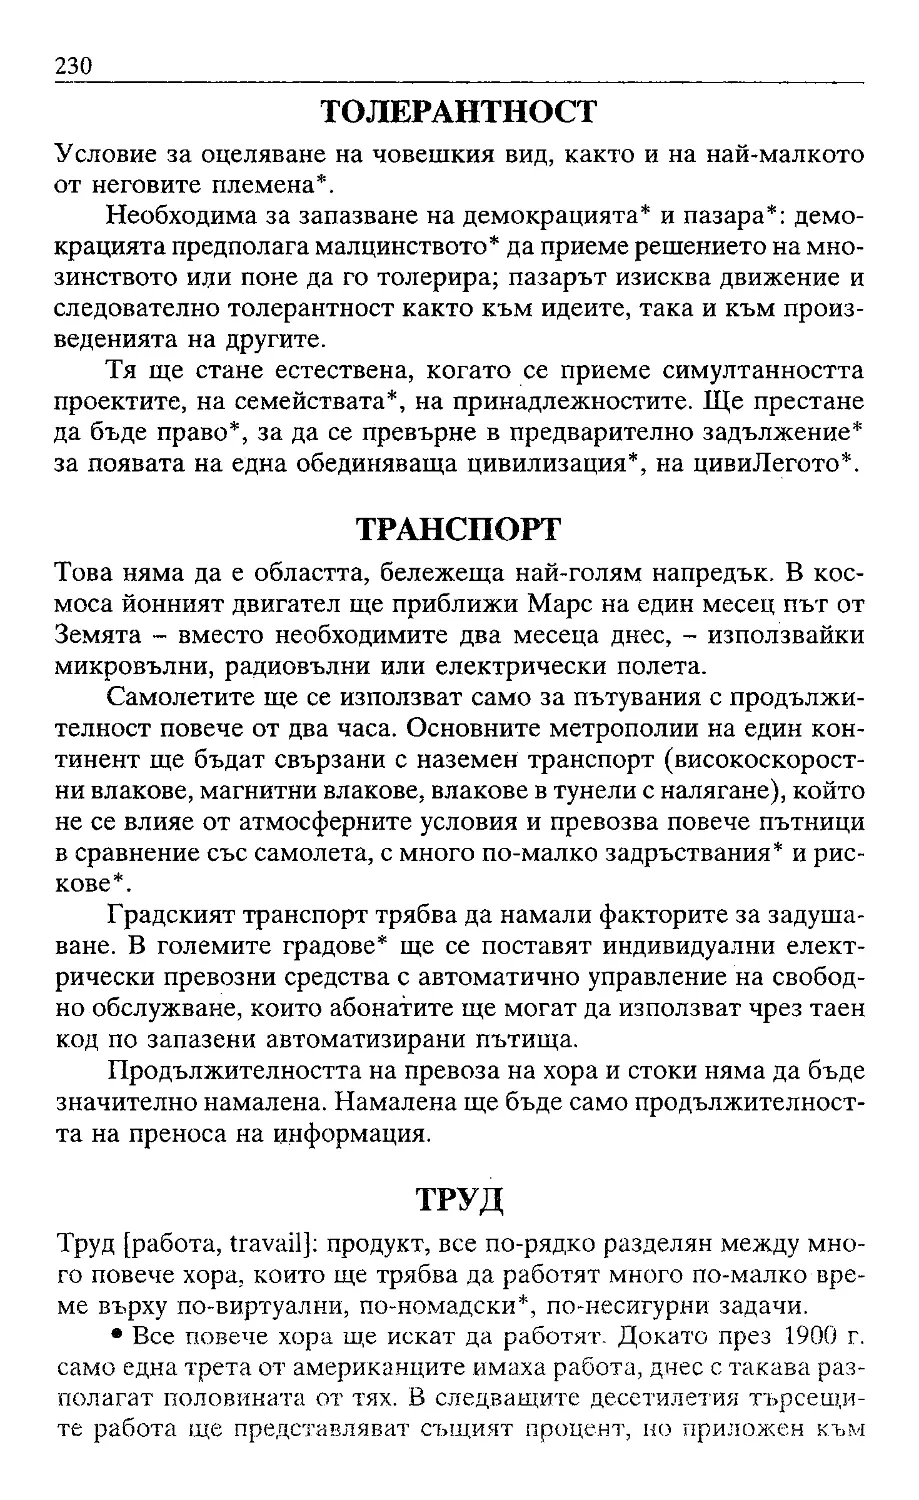 ﻿Жак Атали. Речник на 21 век_Page_114_Image_0001_1